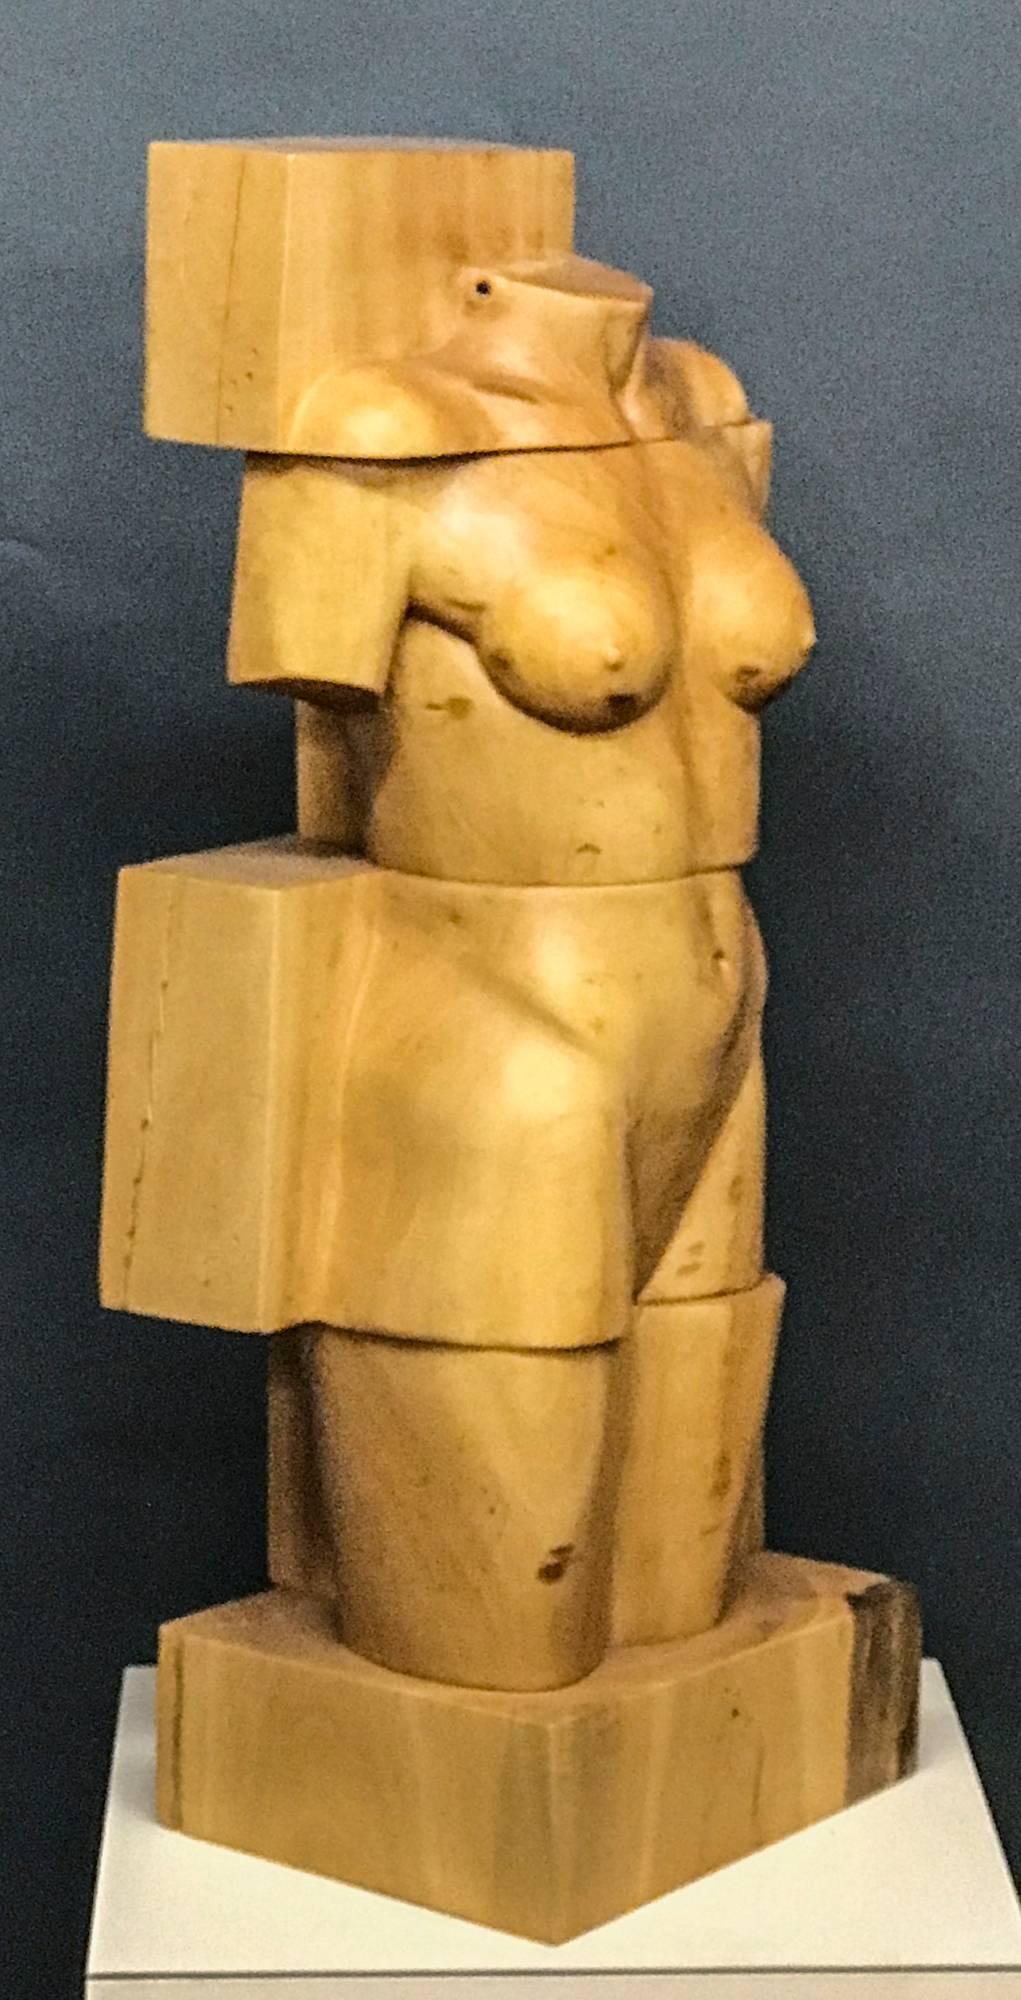 Troy Williams Nude Sculpture - Blocked Torso, wood, female nude